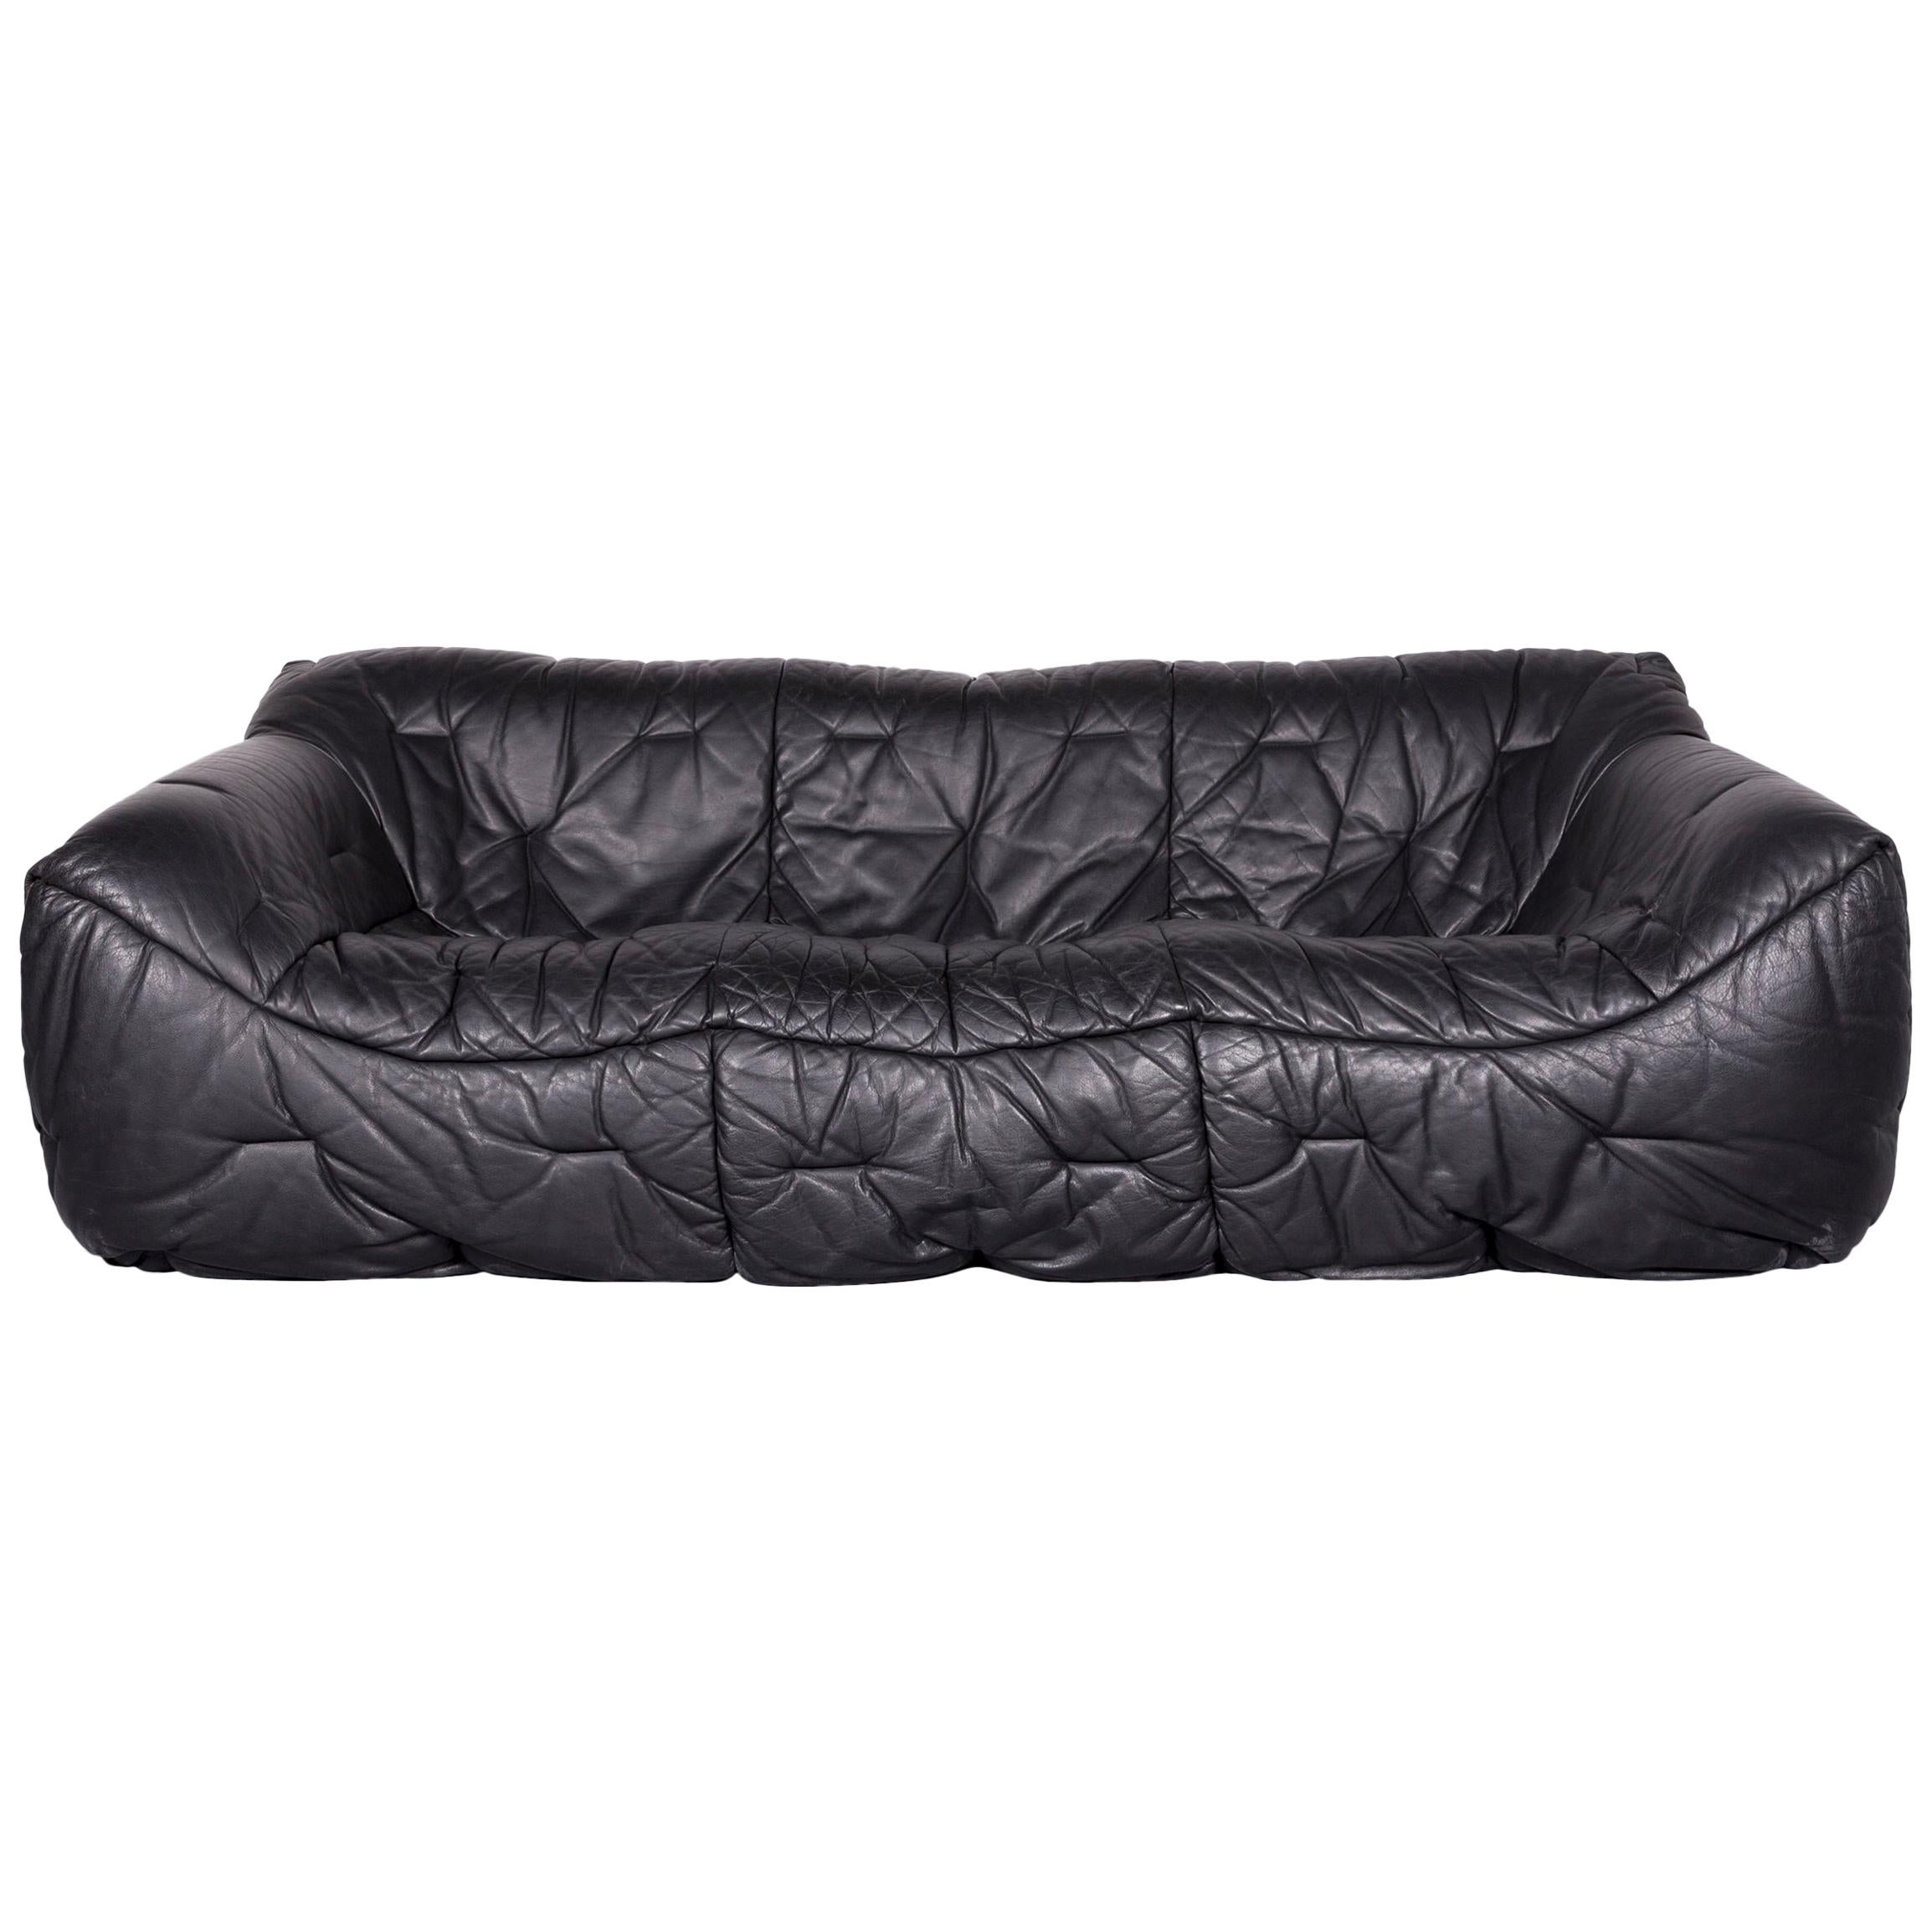 Roche Bobois Informel Designer Leather Sofa Black Three-Seat Couch